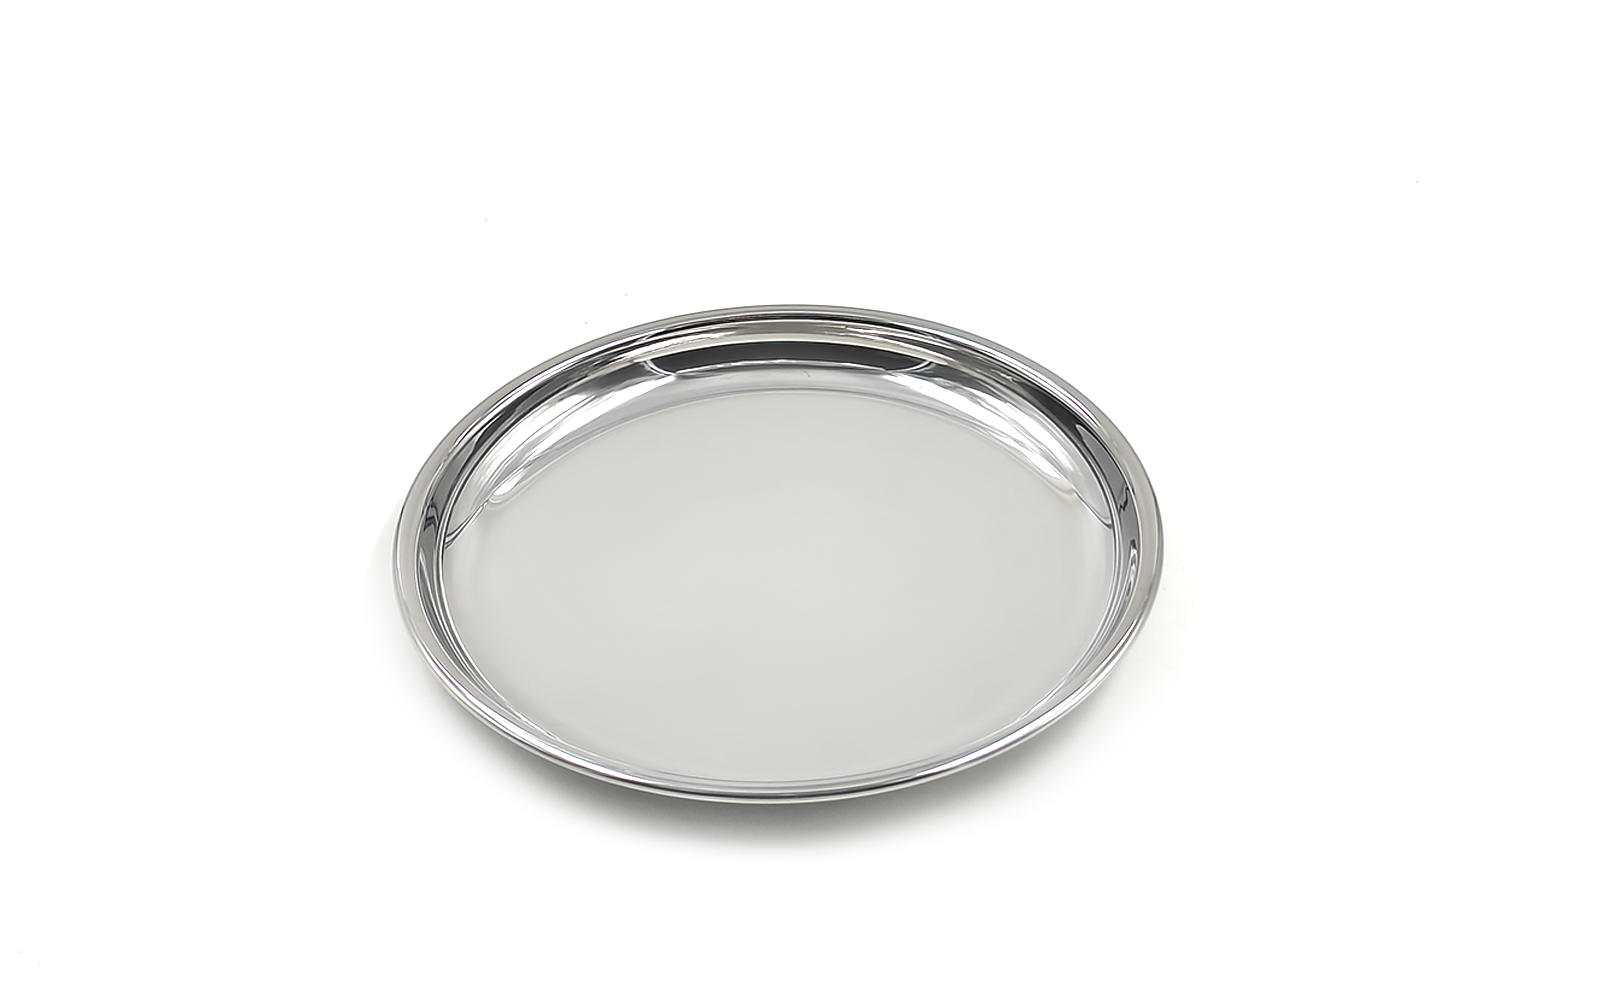 PRADEEP Stainless stell Heavy Gauge Dinner Plate with Mirror Finish/Serveware Plates/Snacks Plates/Thali Plates/Food Grade/Quarter Plates/Full Plates/Steel Serving Plate for Dinner